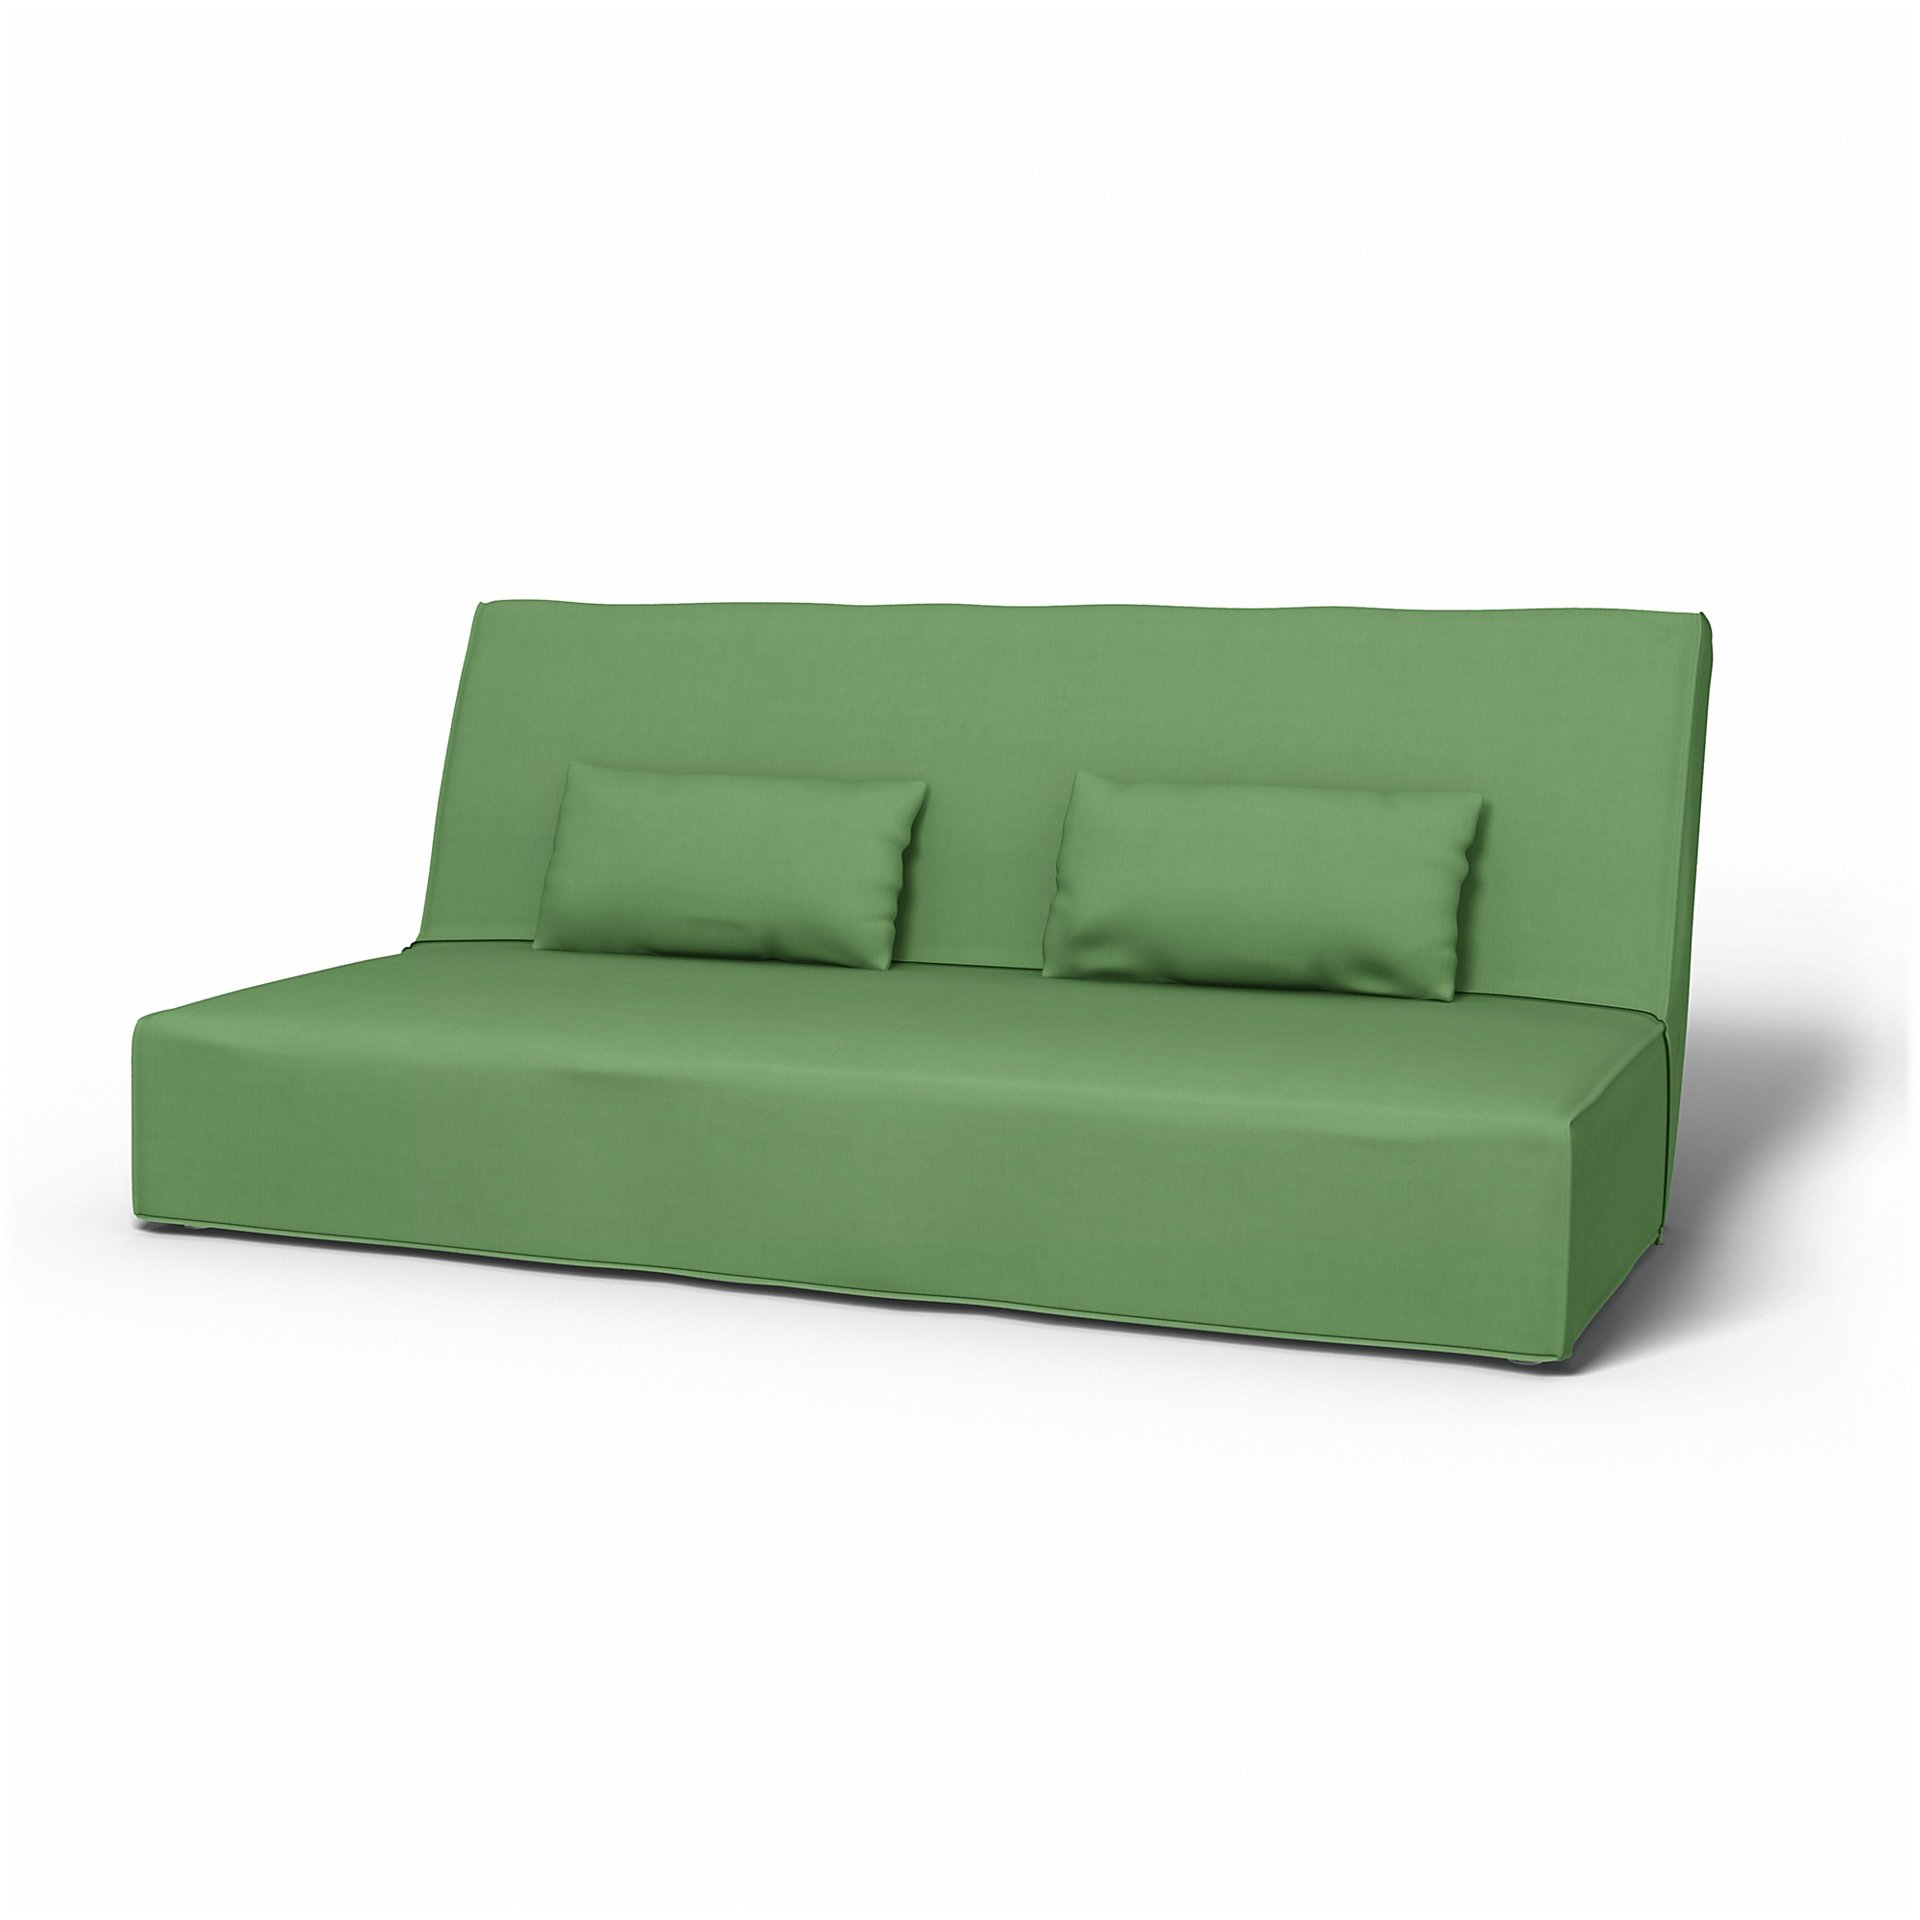 IKEA - Beddinge Sofa Bed Cover, Apple Green, Linen - Bemz